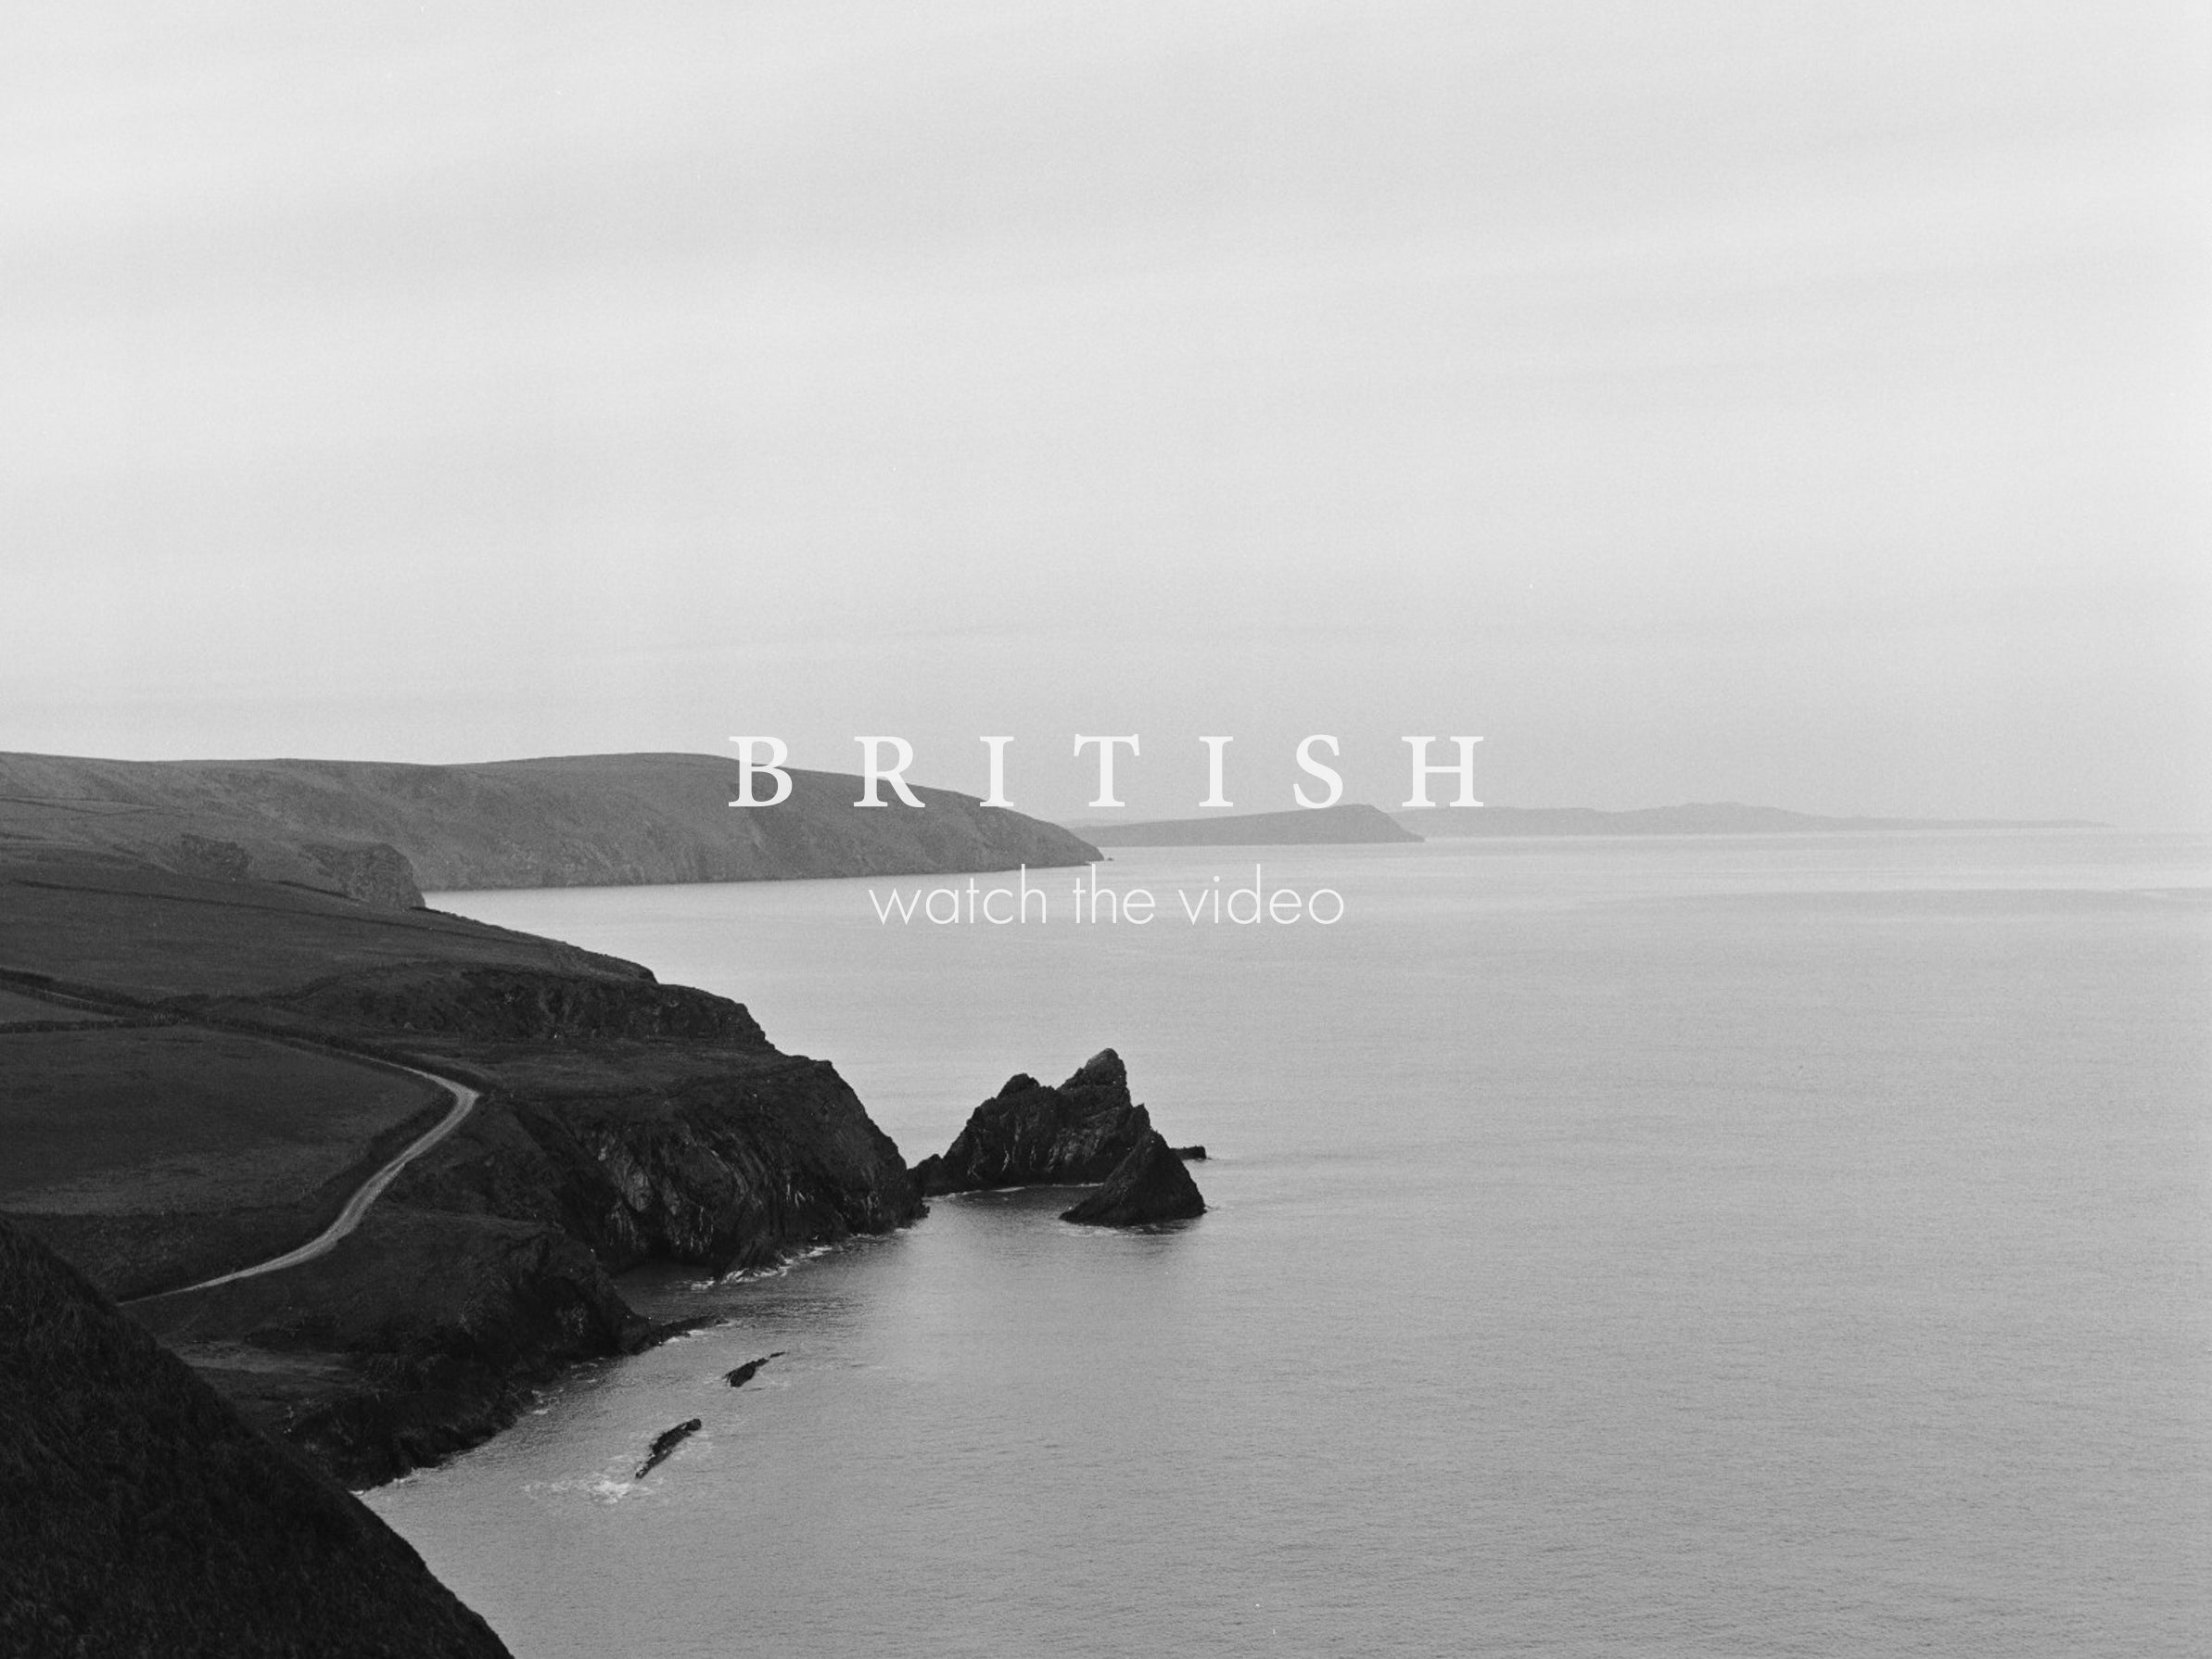 British coastline for made in Britain video link